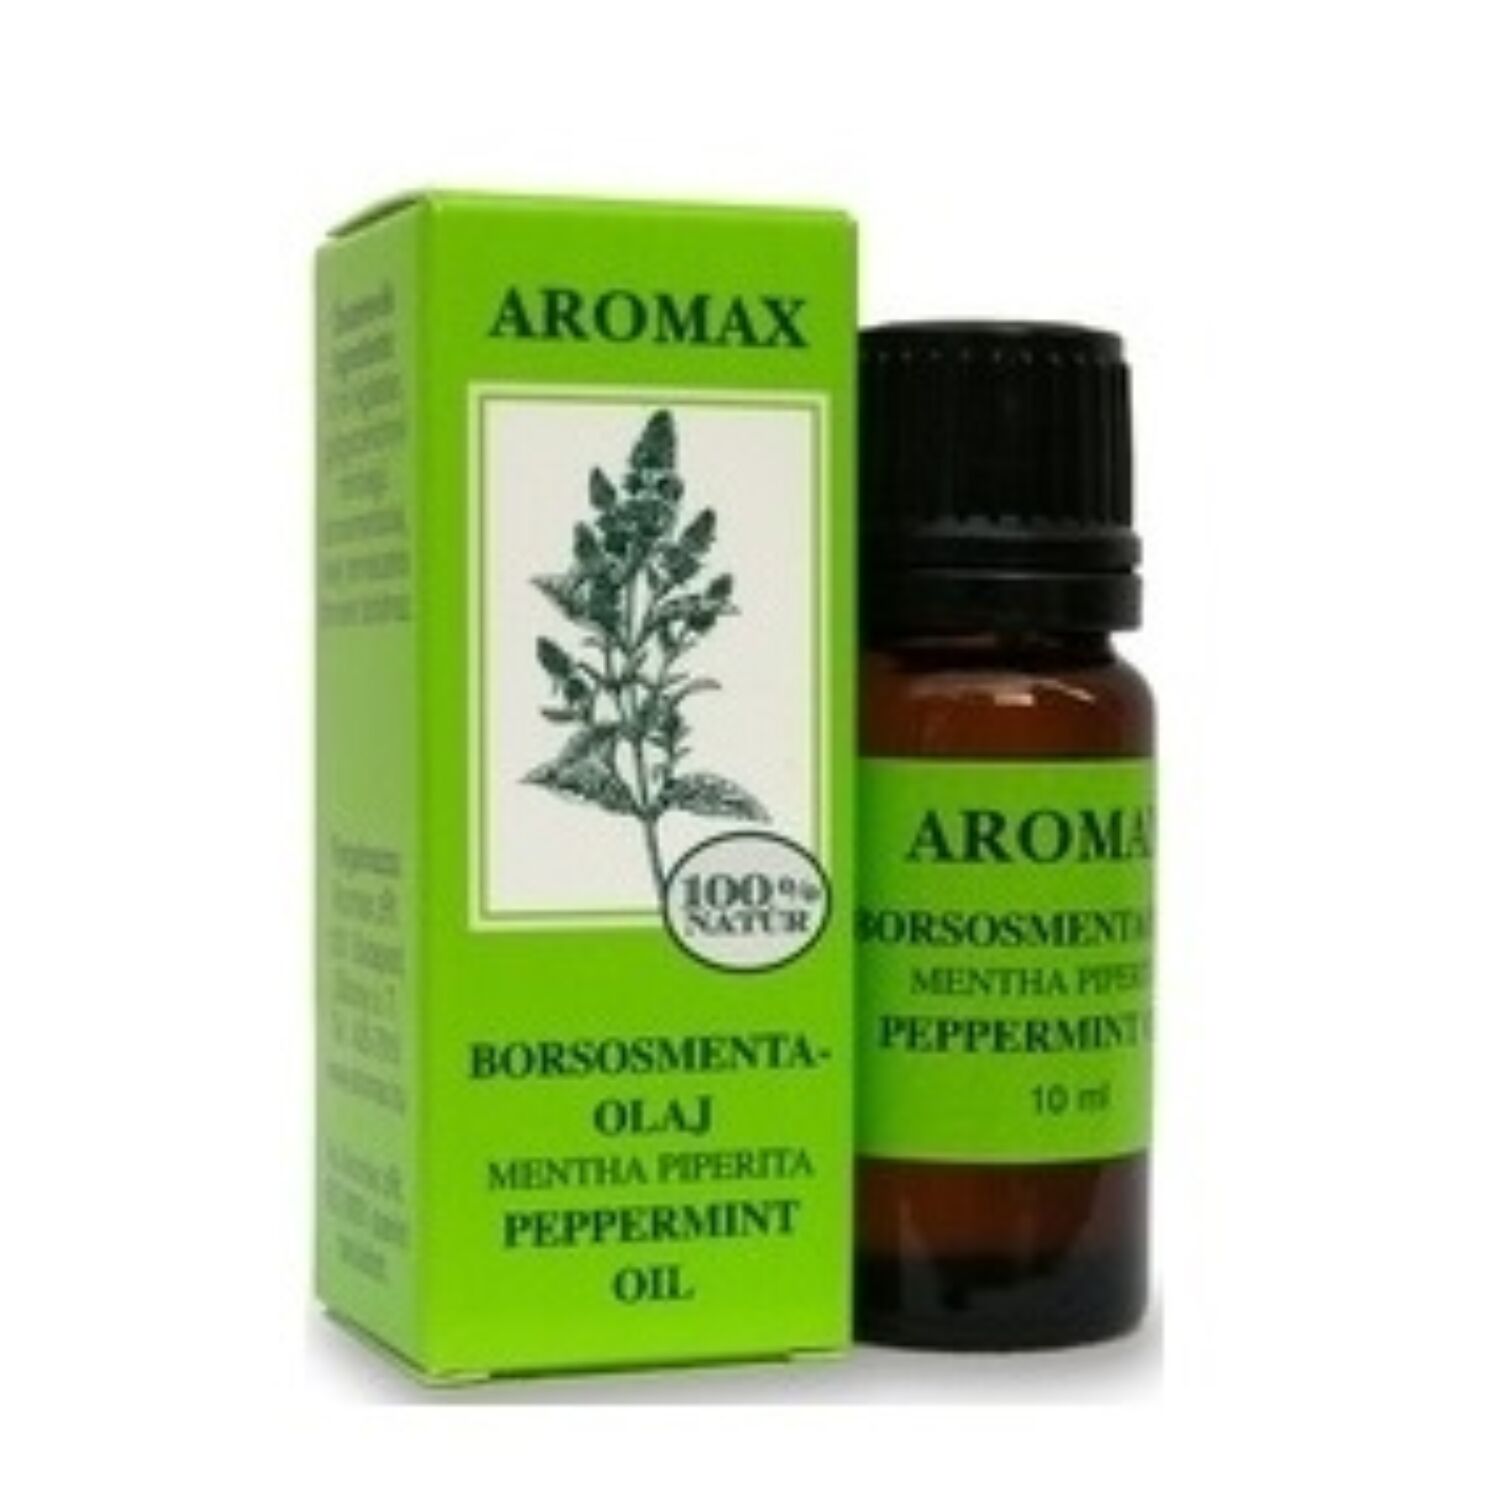 Aromax Borsosmentaolaj 10 ml 